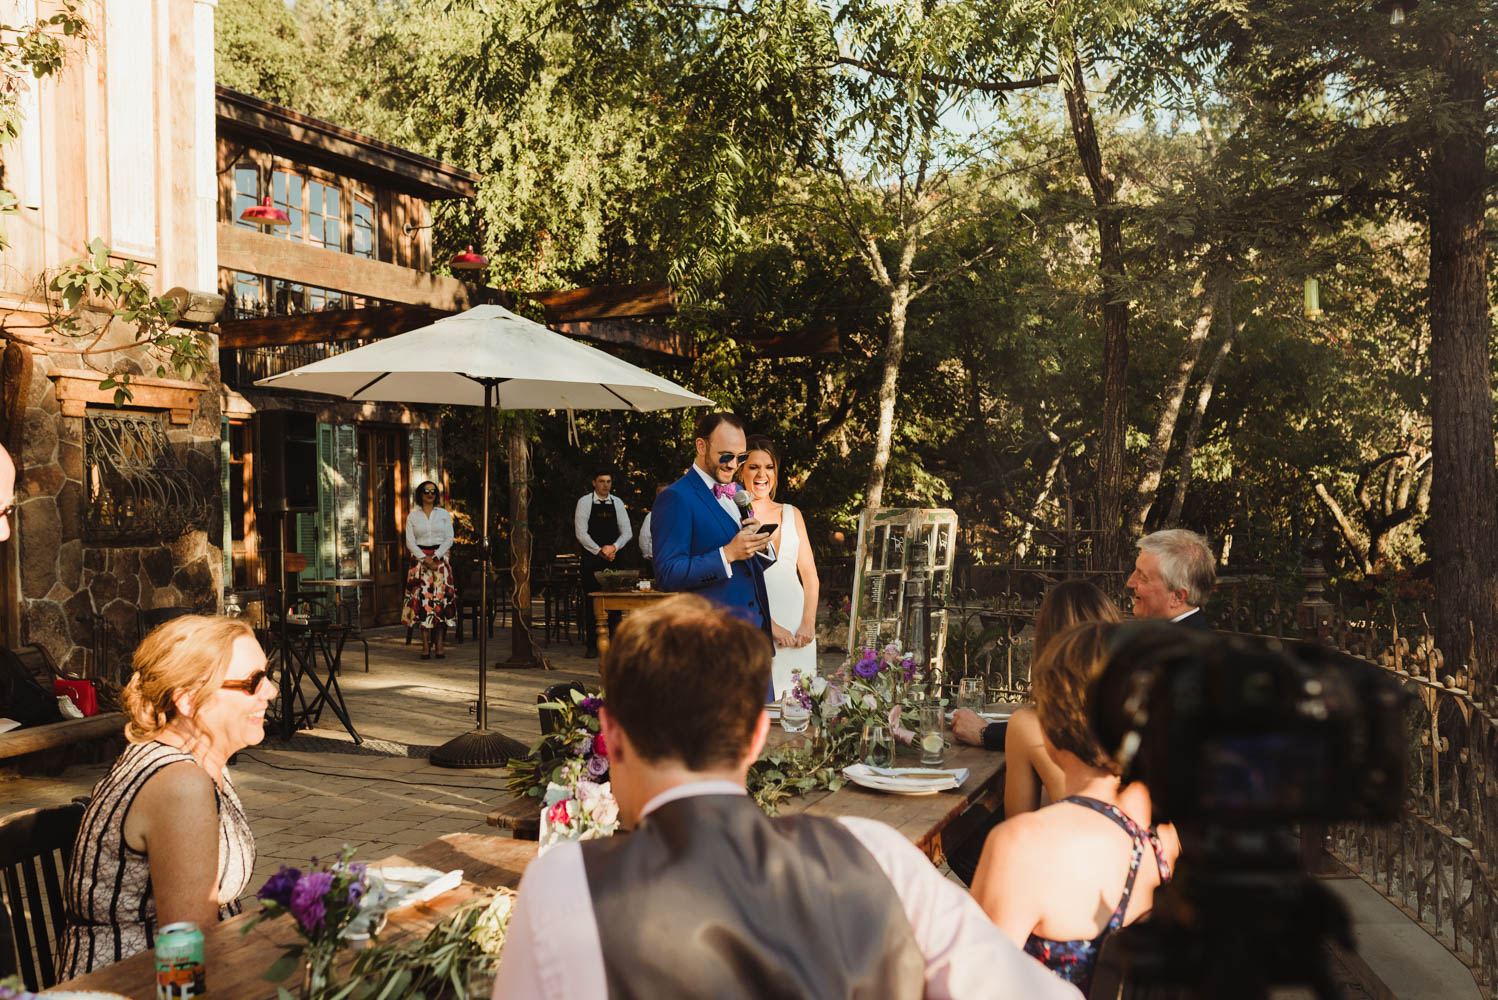 Triple S Ranch Wedding Venue, couple laughing photo